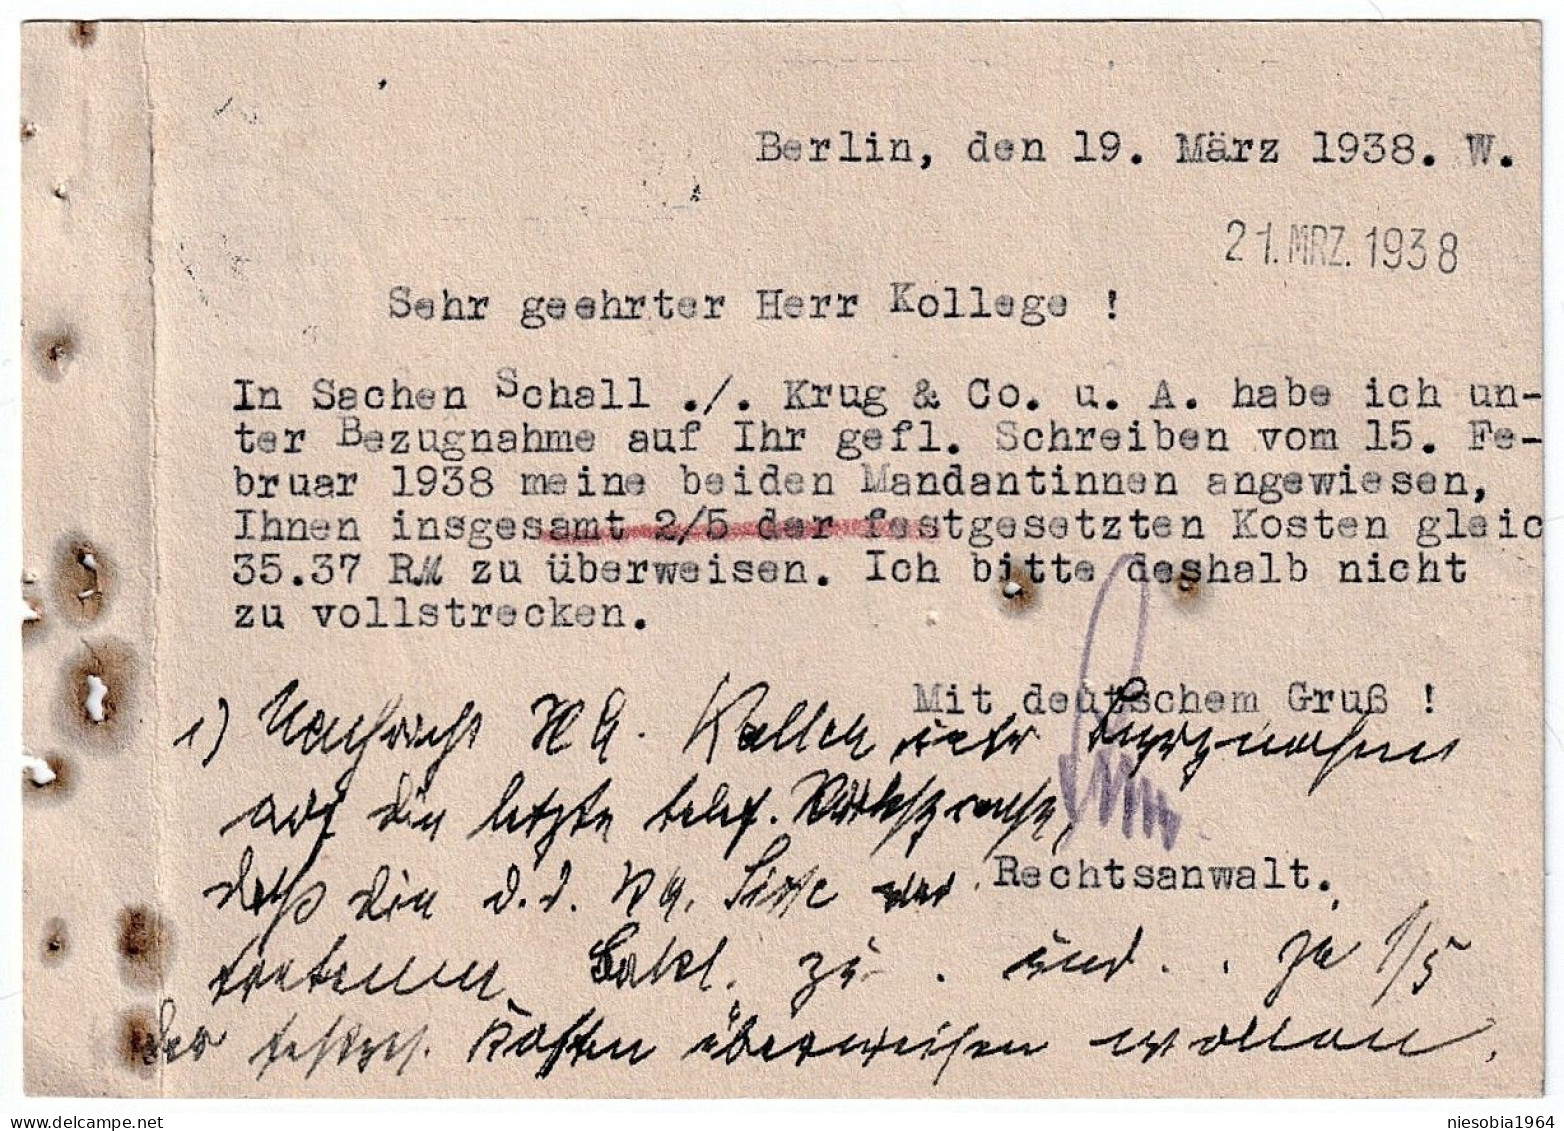 Berlin Willy Sitte Notar - Member Of NSRB -19.03.1938 Company Postcard / Firmenpostkarte - Postkarten